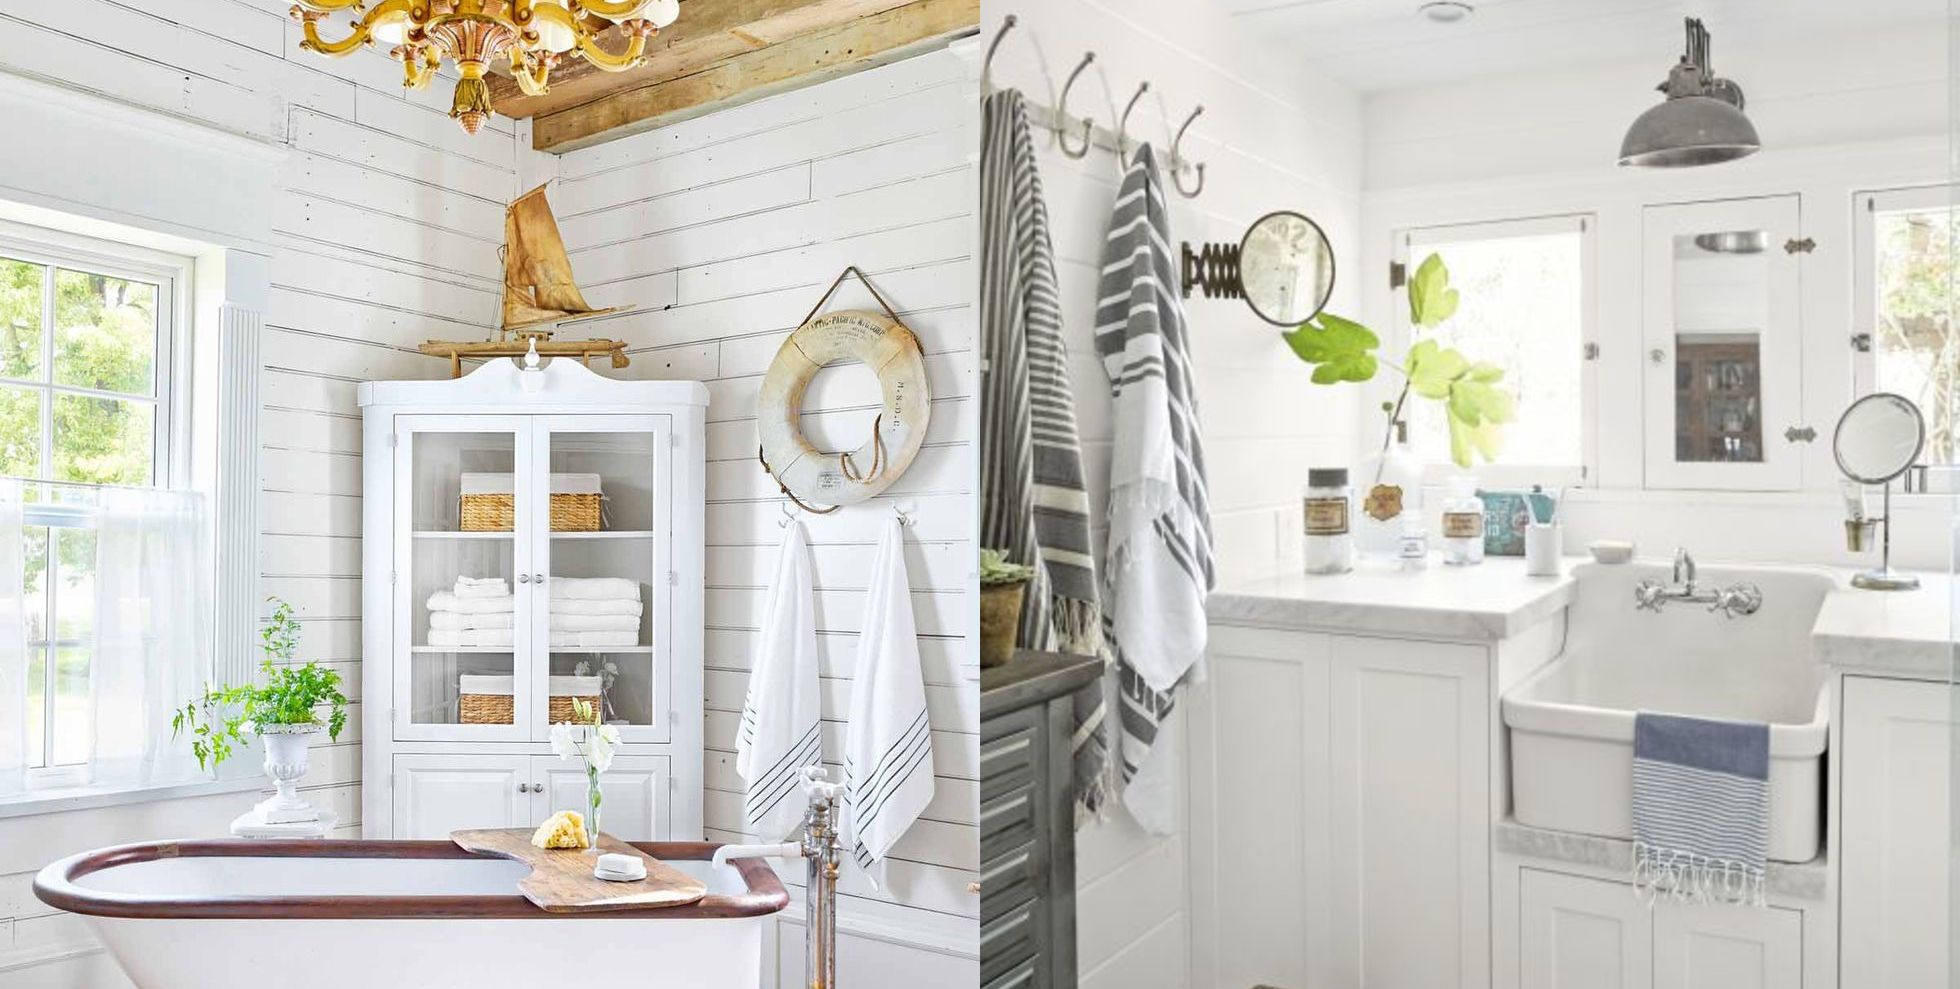 Rustic bathroom ideas – 10 design secrets to help you relax in rural comfort